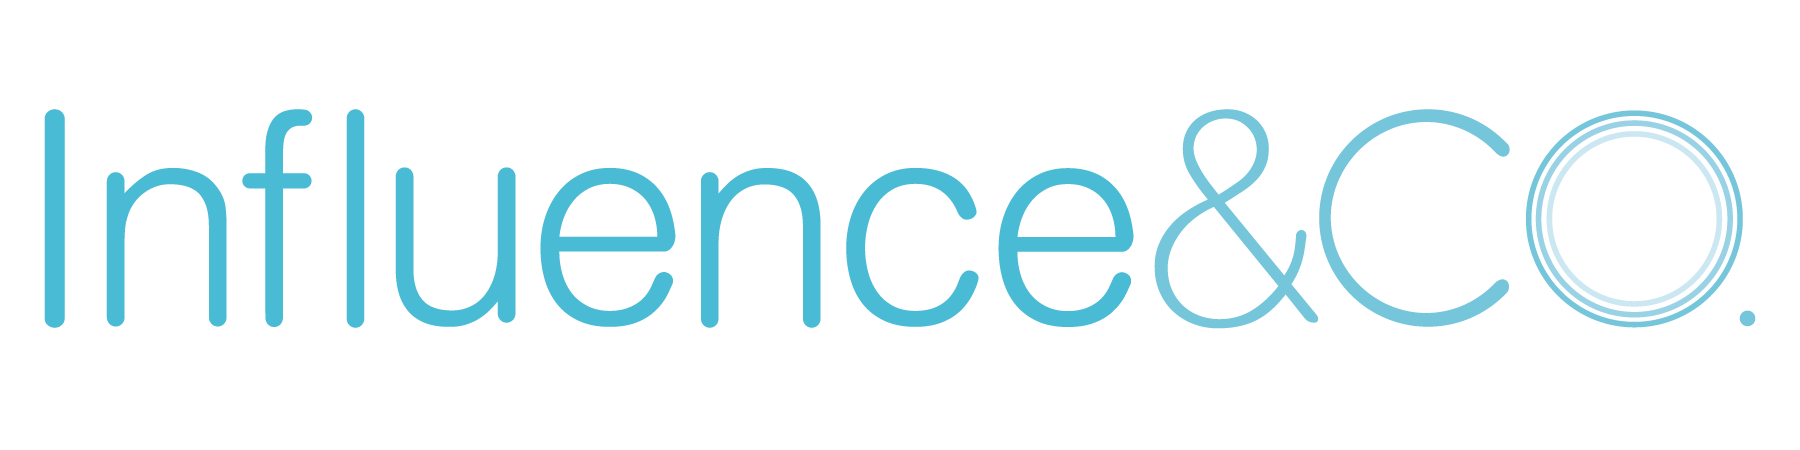 influence&co-logo